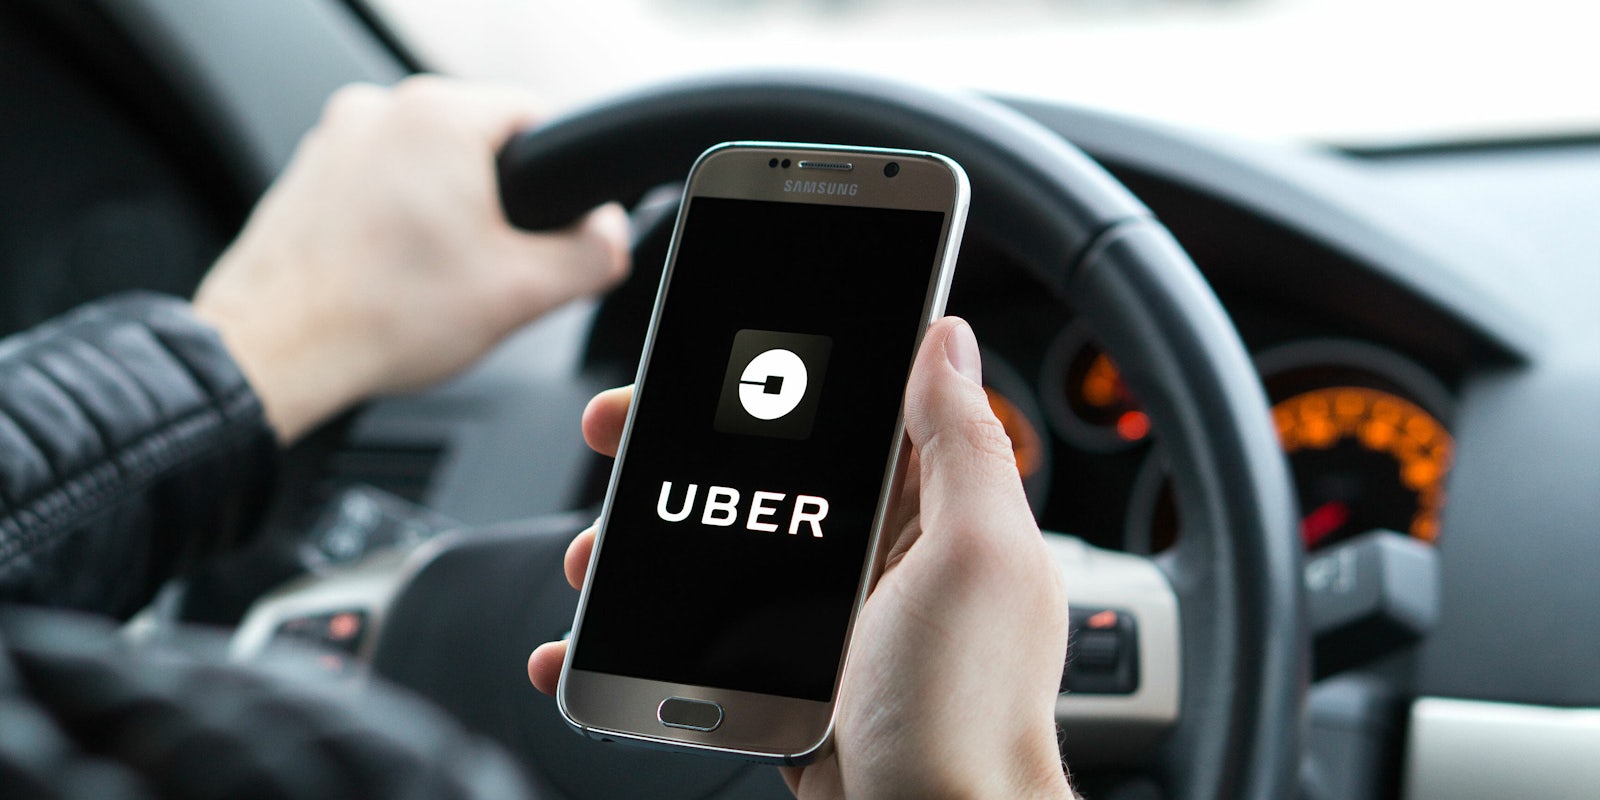 uber ride-hailing app on smartphone